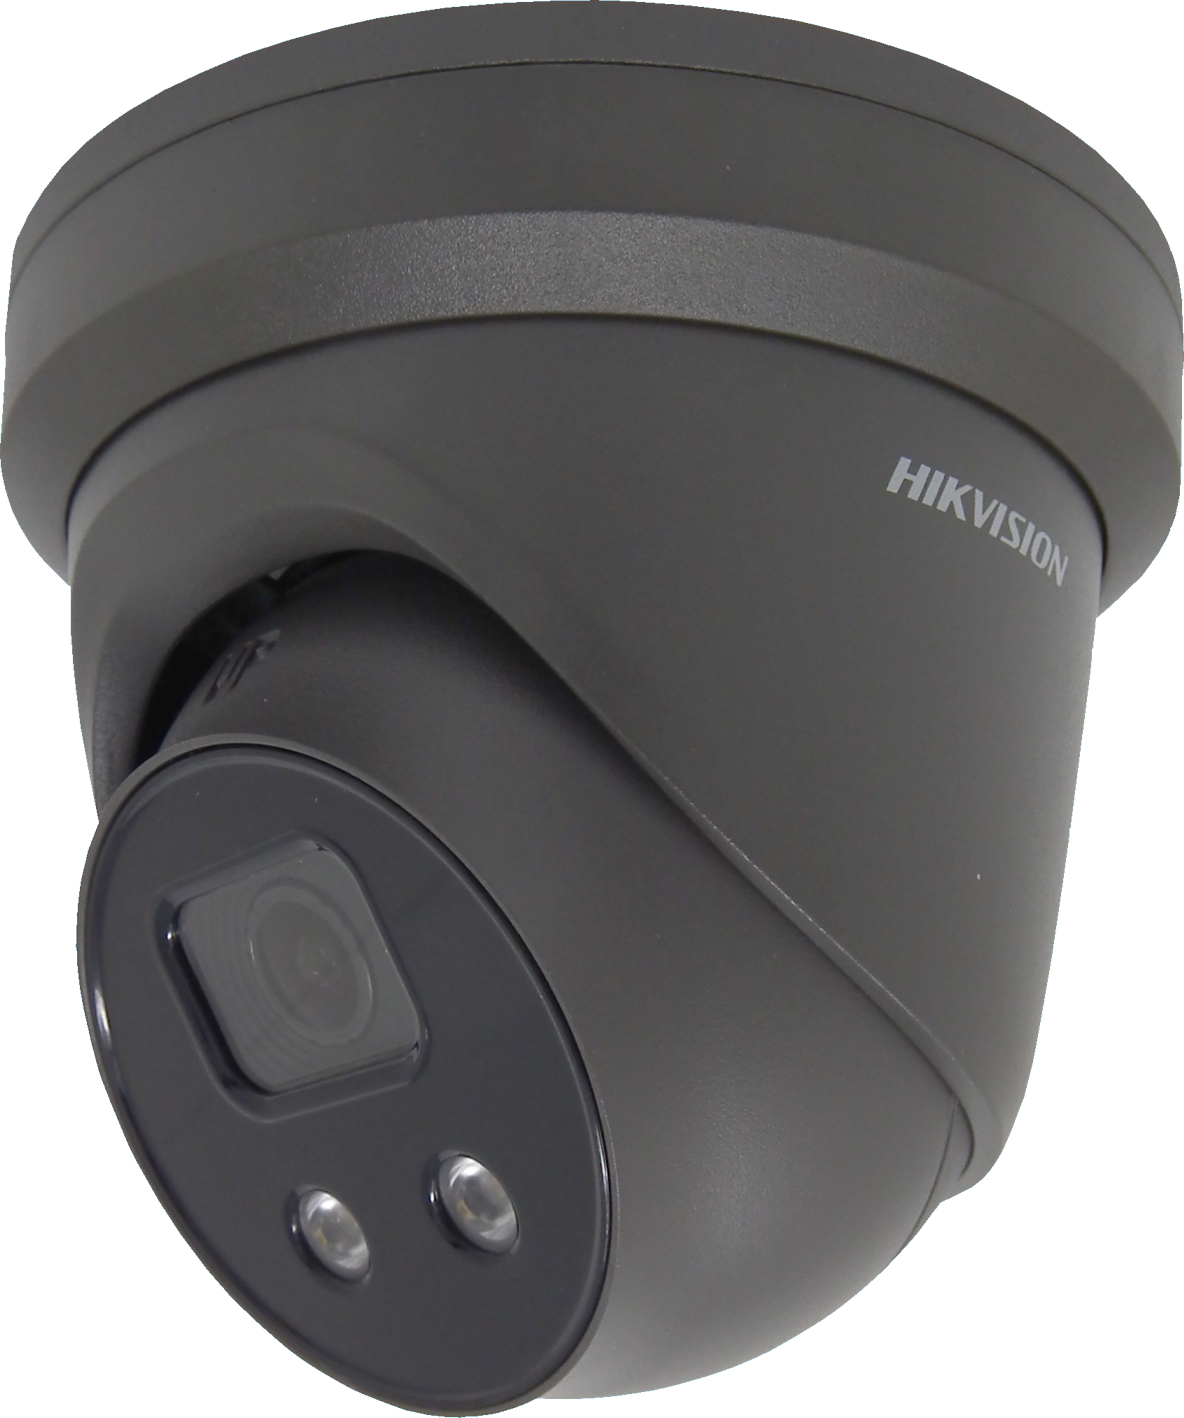 20000890 Hikvision AcuSense EasyIP 4.0 4MP caméra IP EXIR Turret, 2.8mm, microphone intégré, noir